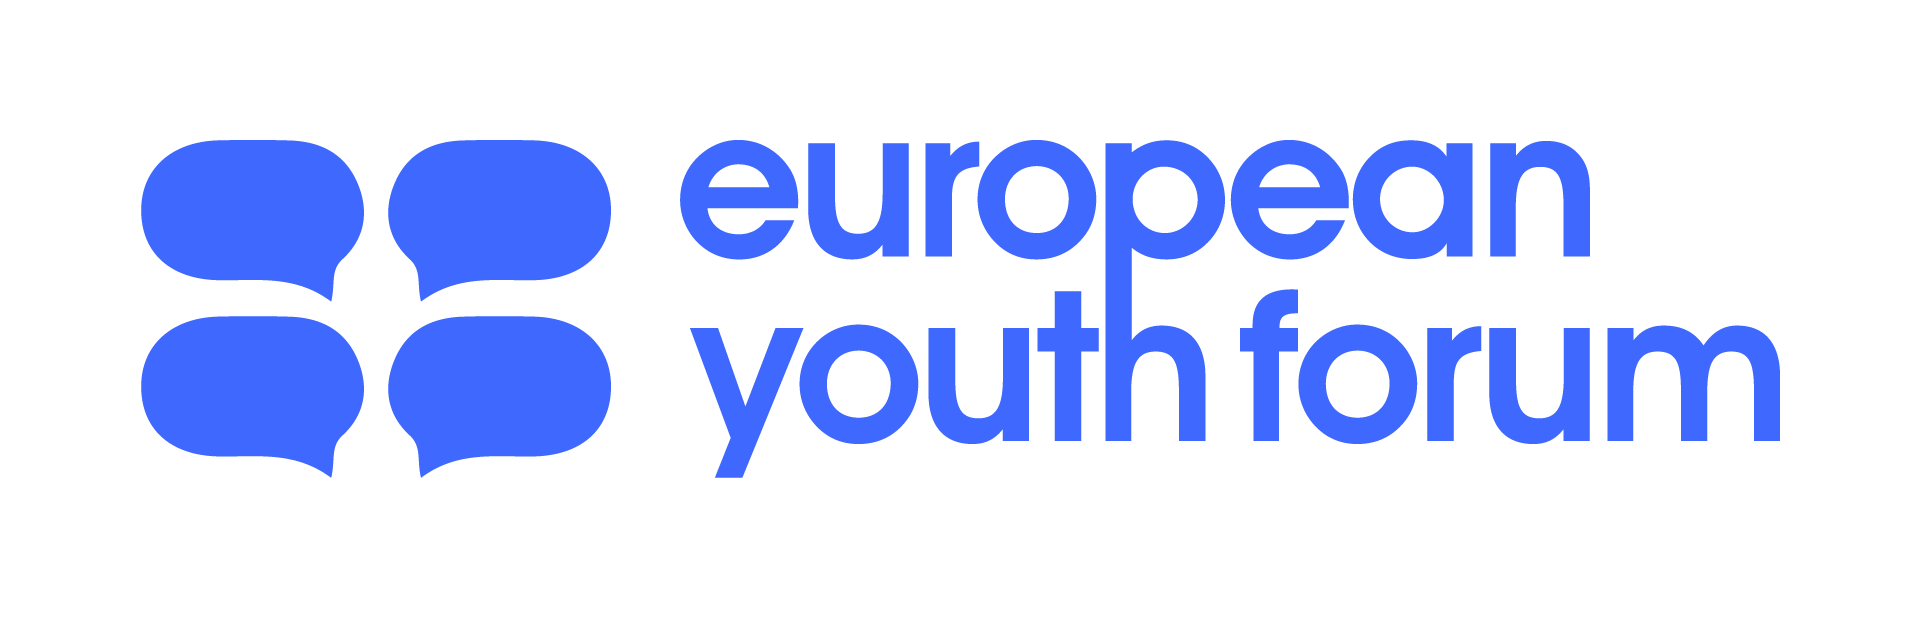 European youth forum